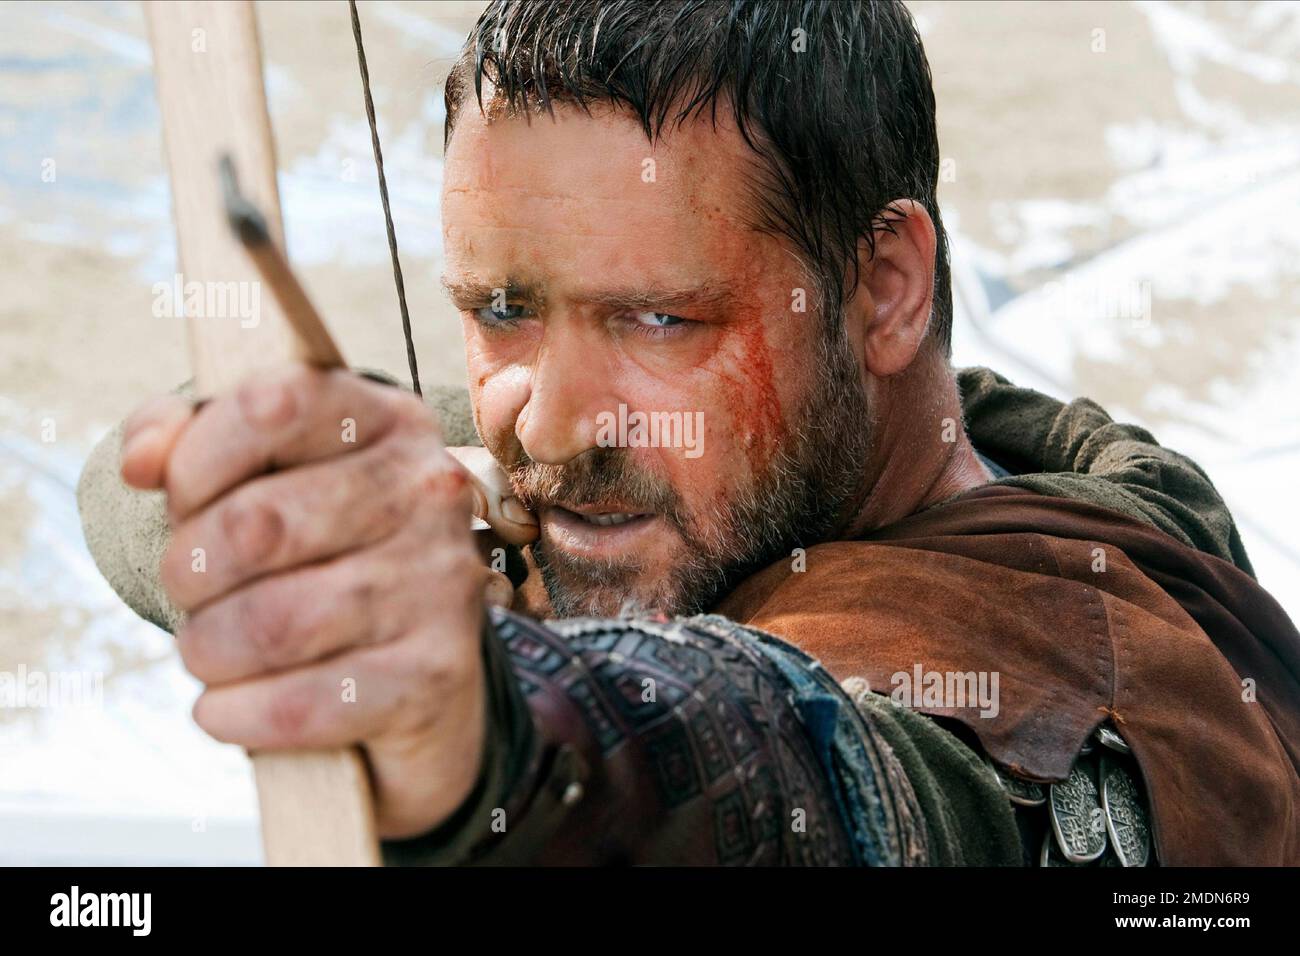 Robin Hood 2010  Russell Crowe   Director - Ridley Scott Stock Photo